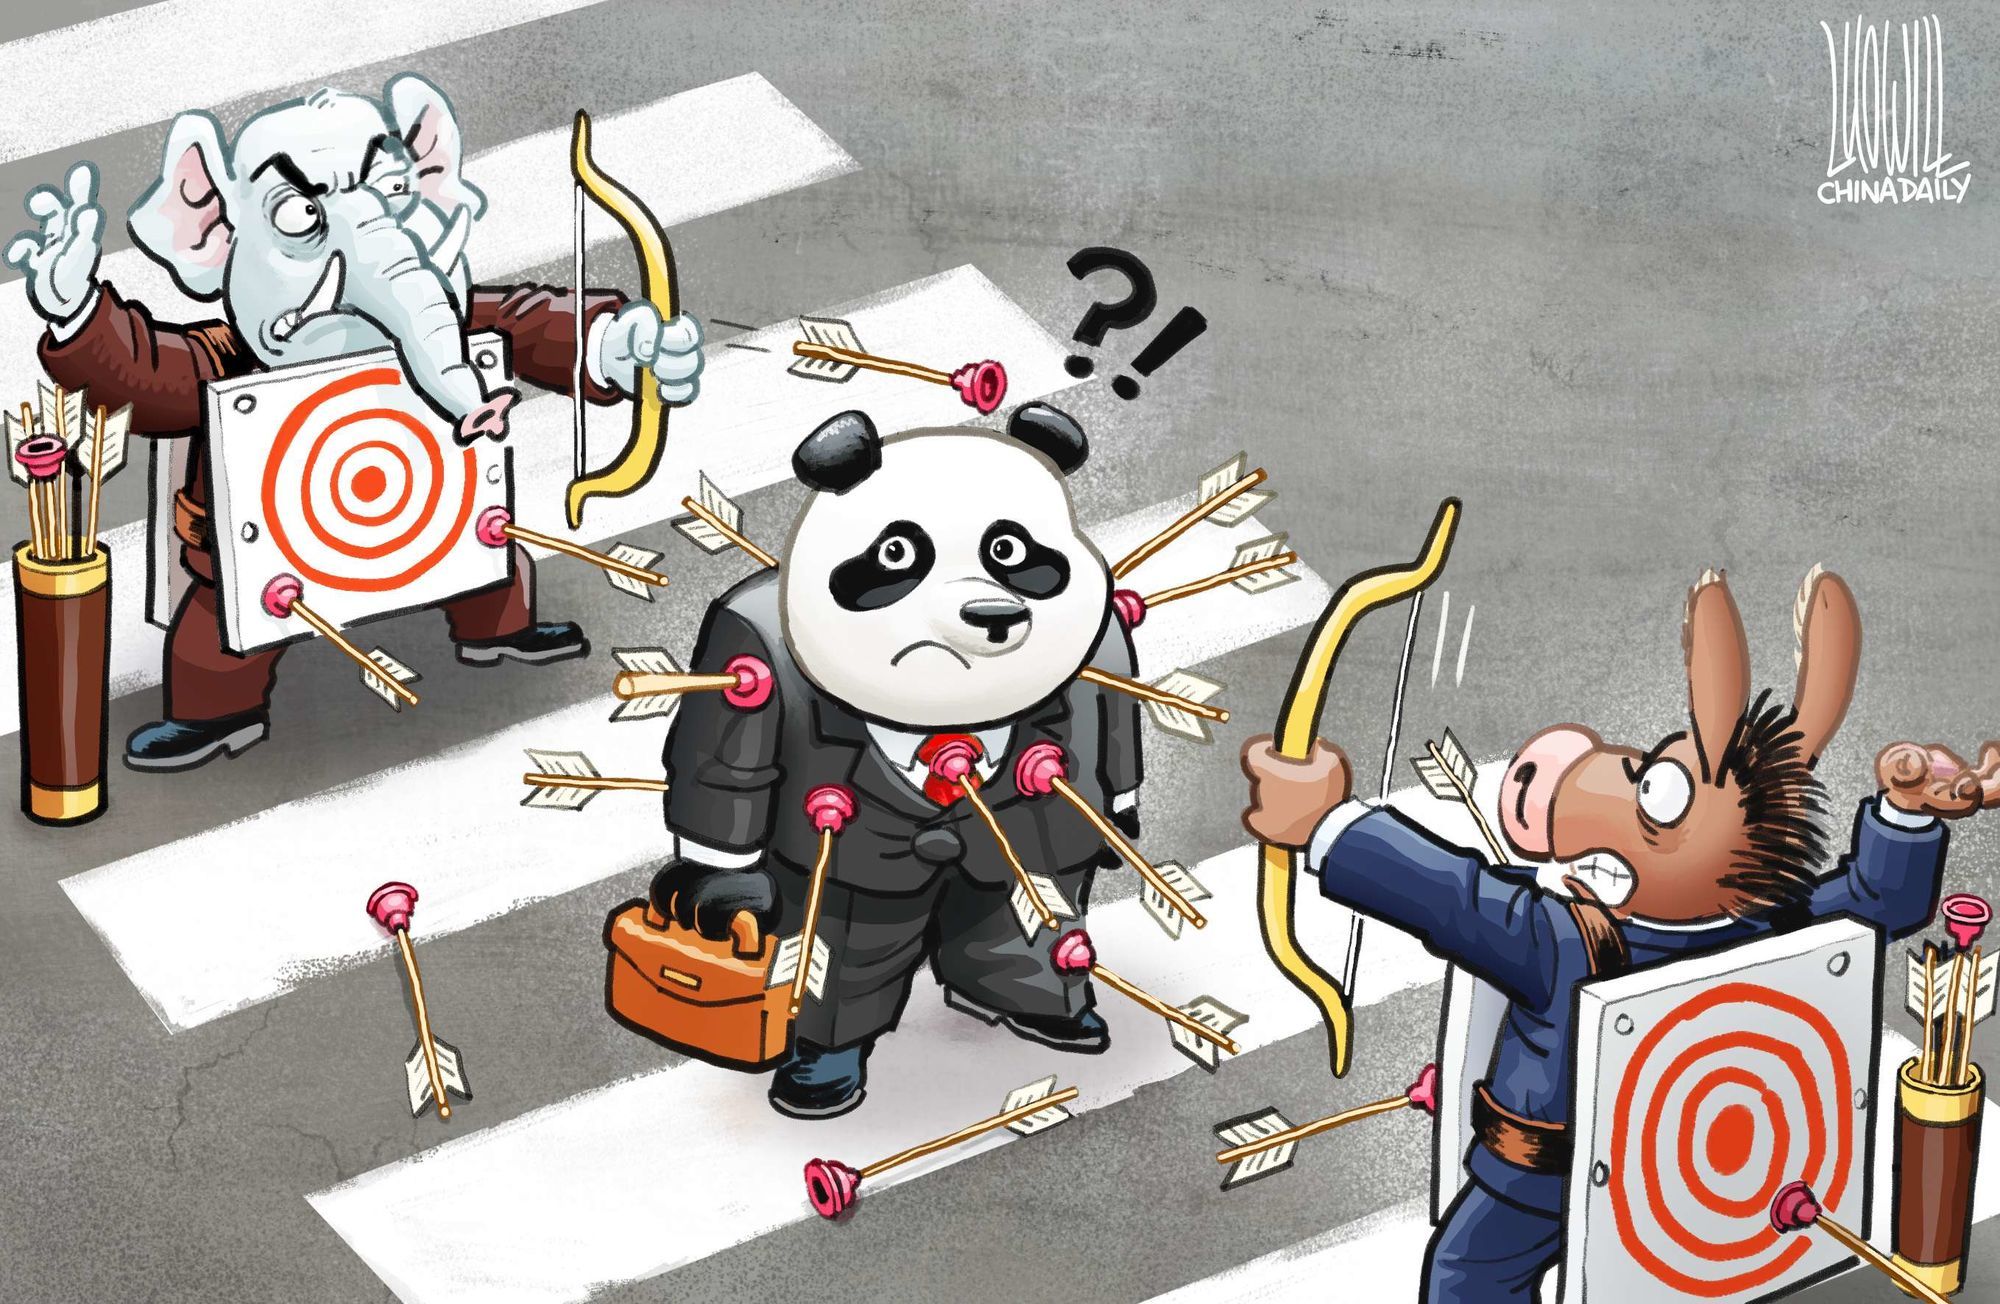 General 2000x1304 politics panda elephant bow and arrow targets donkey humor digital art watermarked